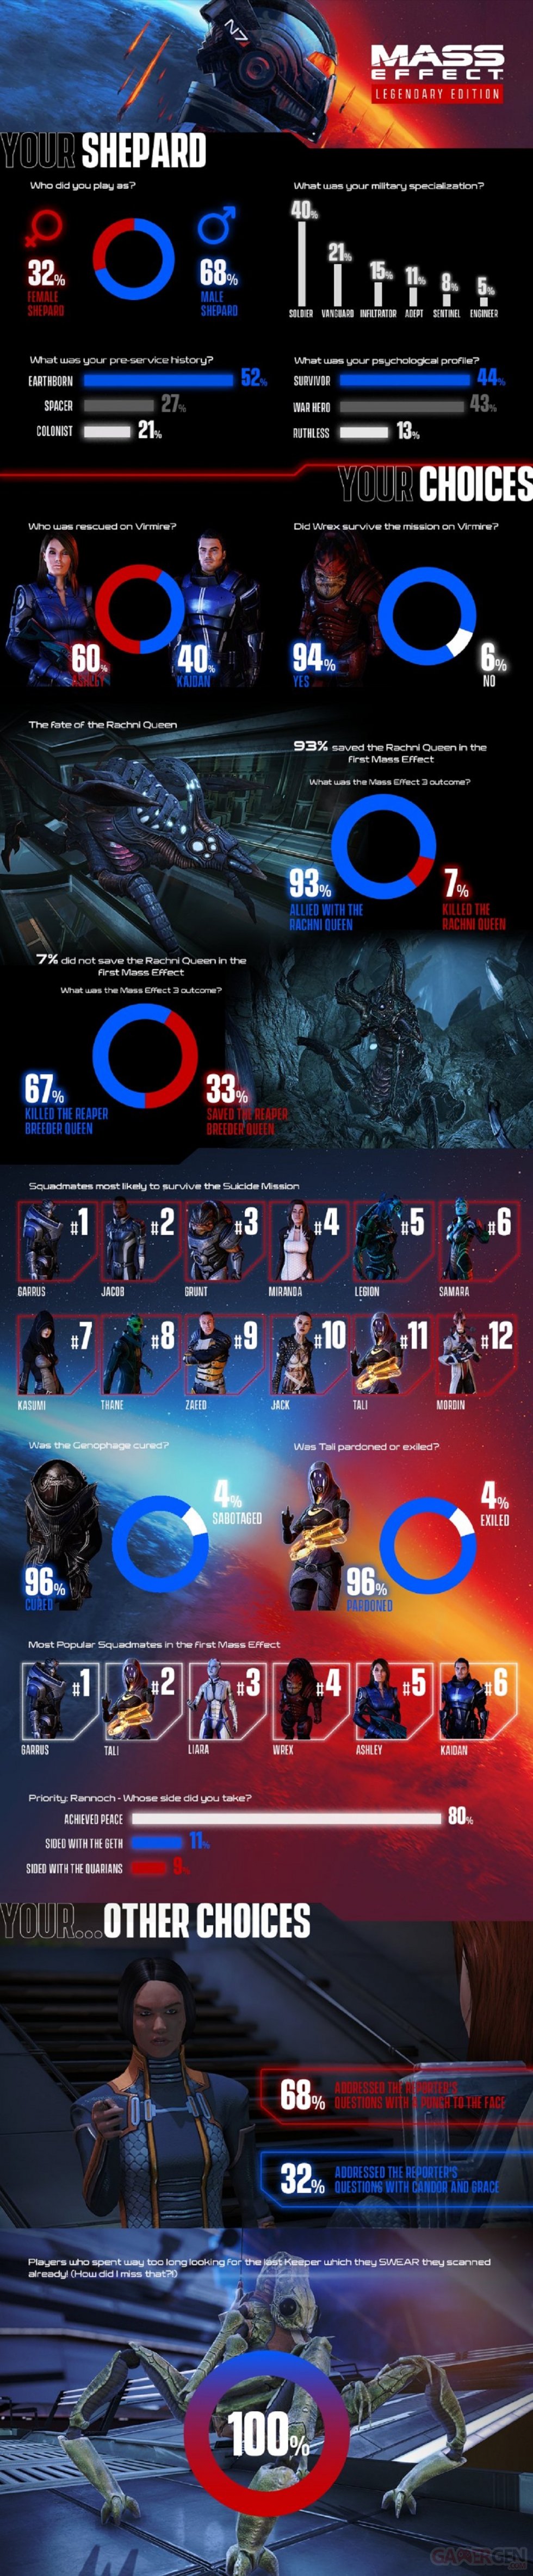 Mass Effect Édition Légendaire Infographie Stats